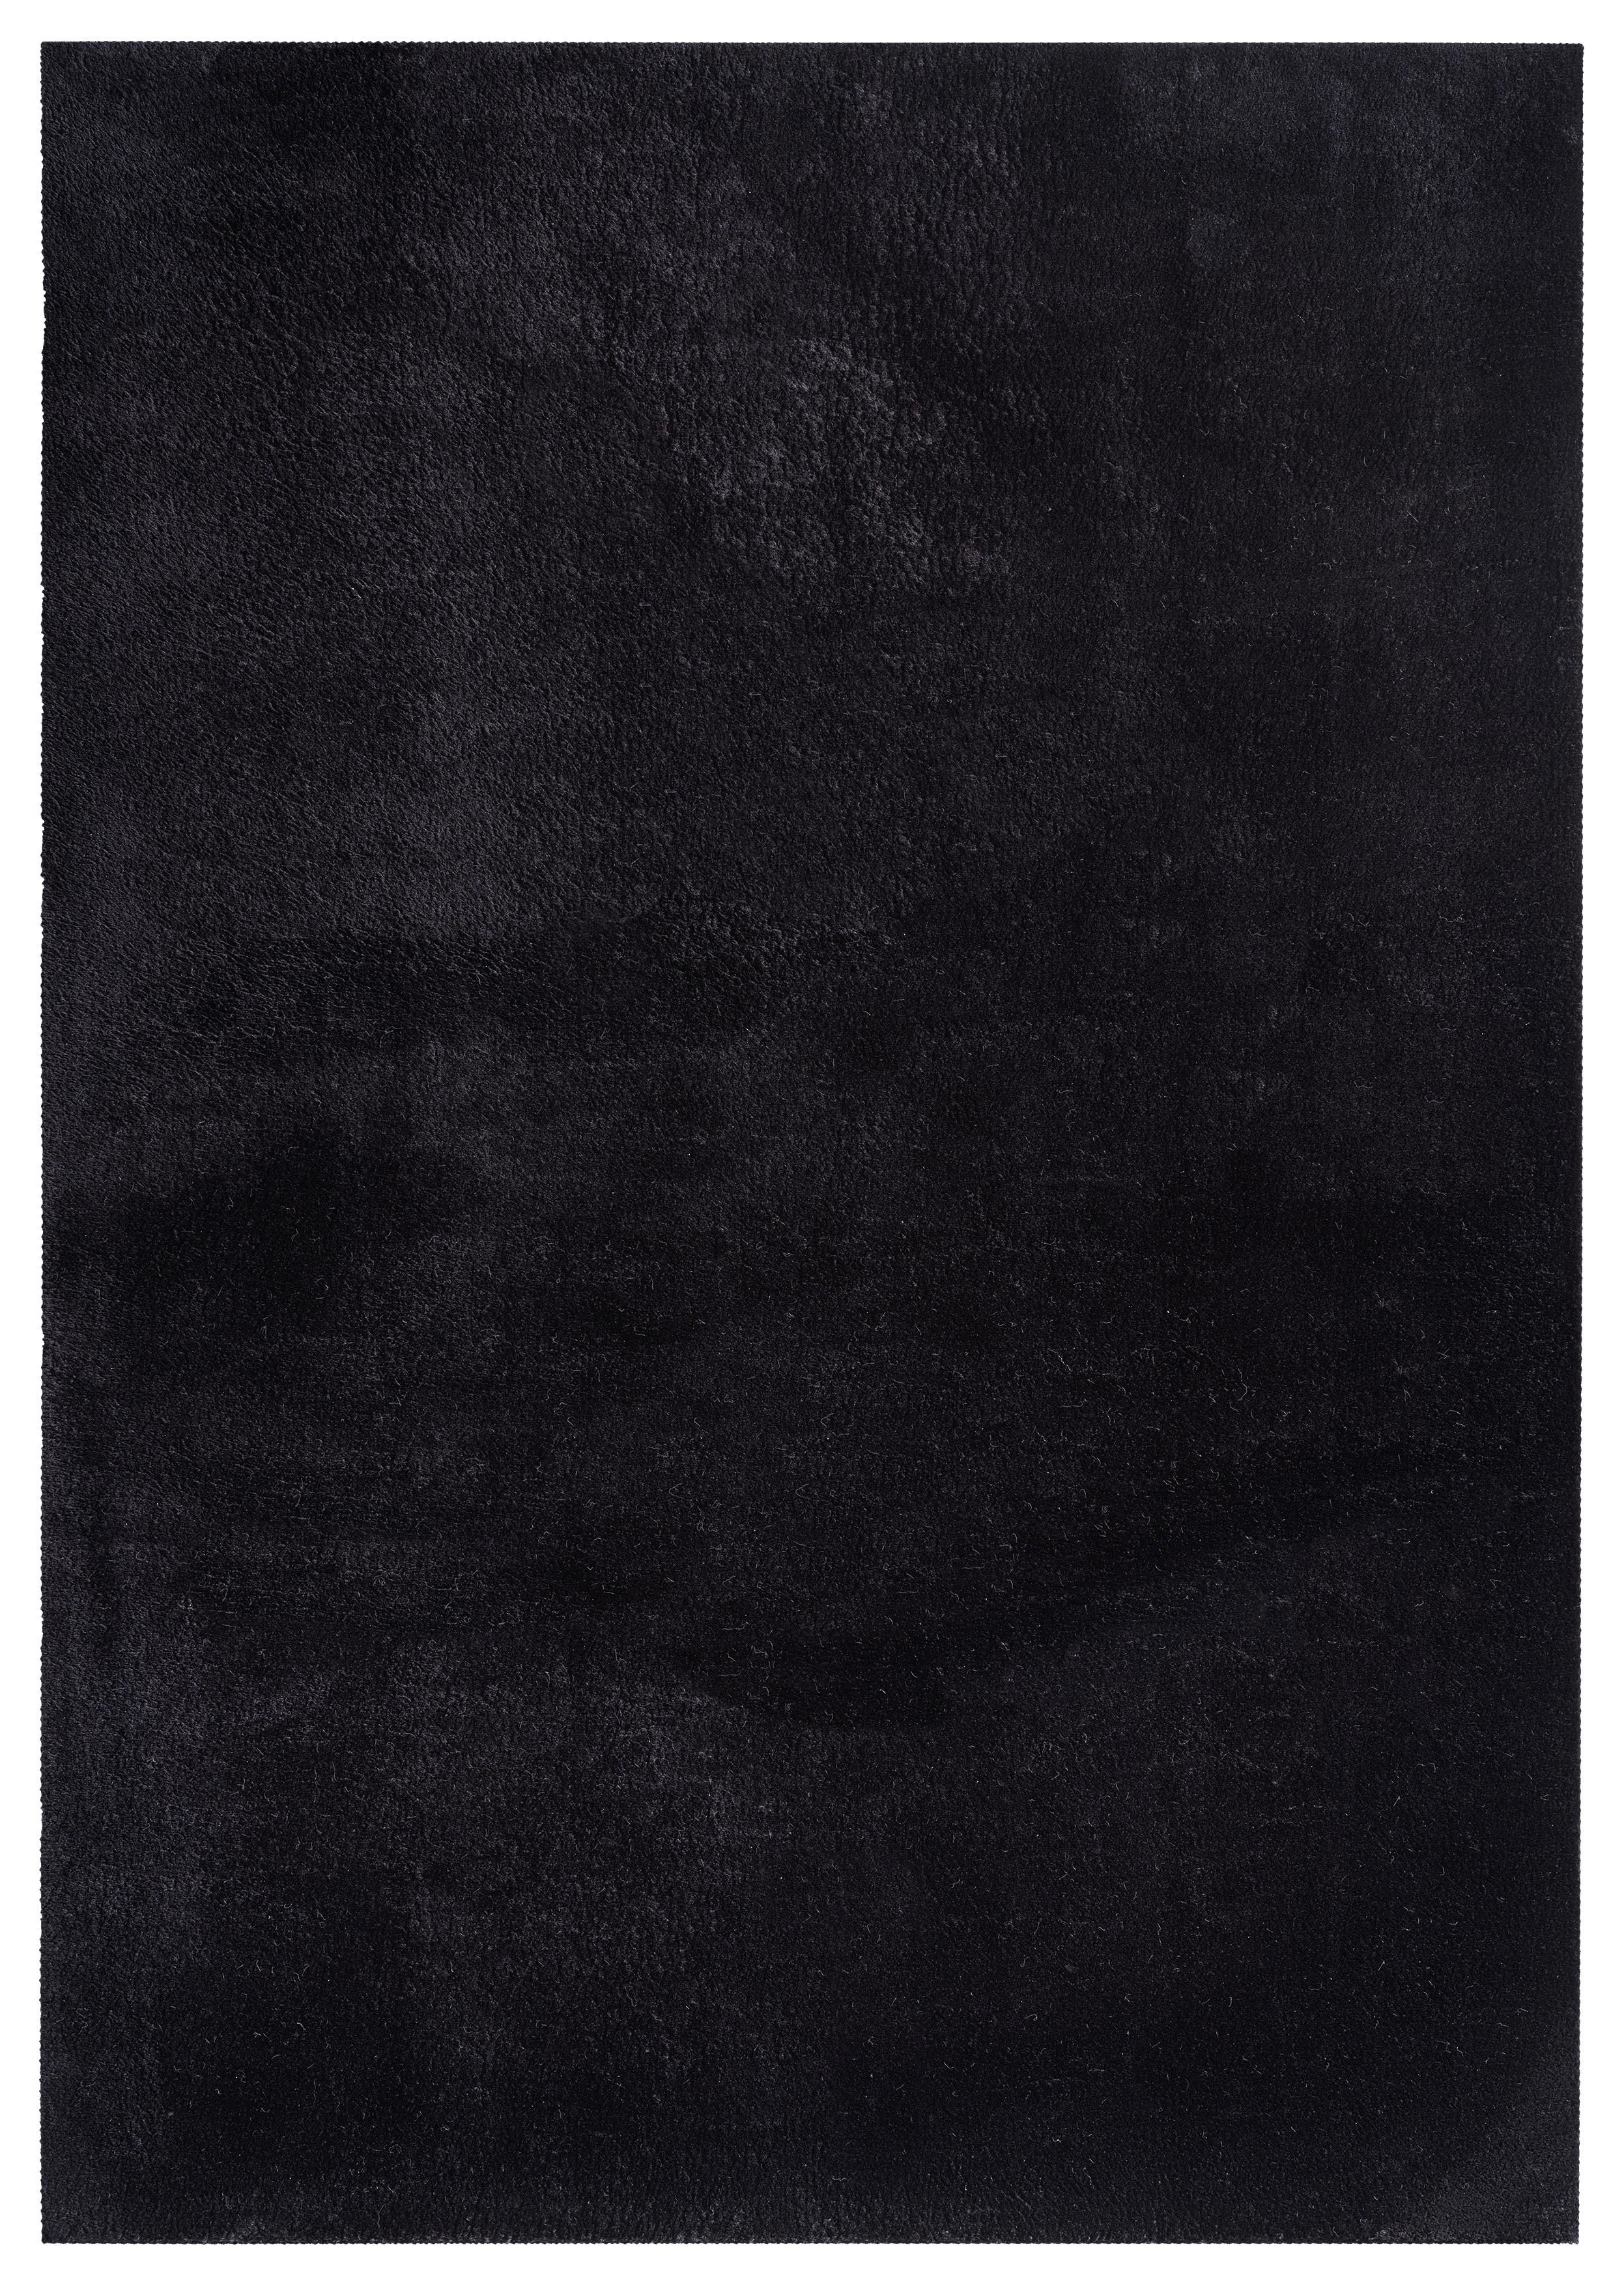 Teppich Loft schwarz B/L: ca. 80x150 cm Loft - schwarz (80,00/150,00cm)